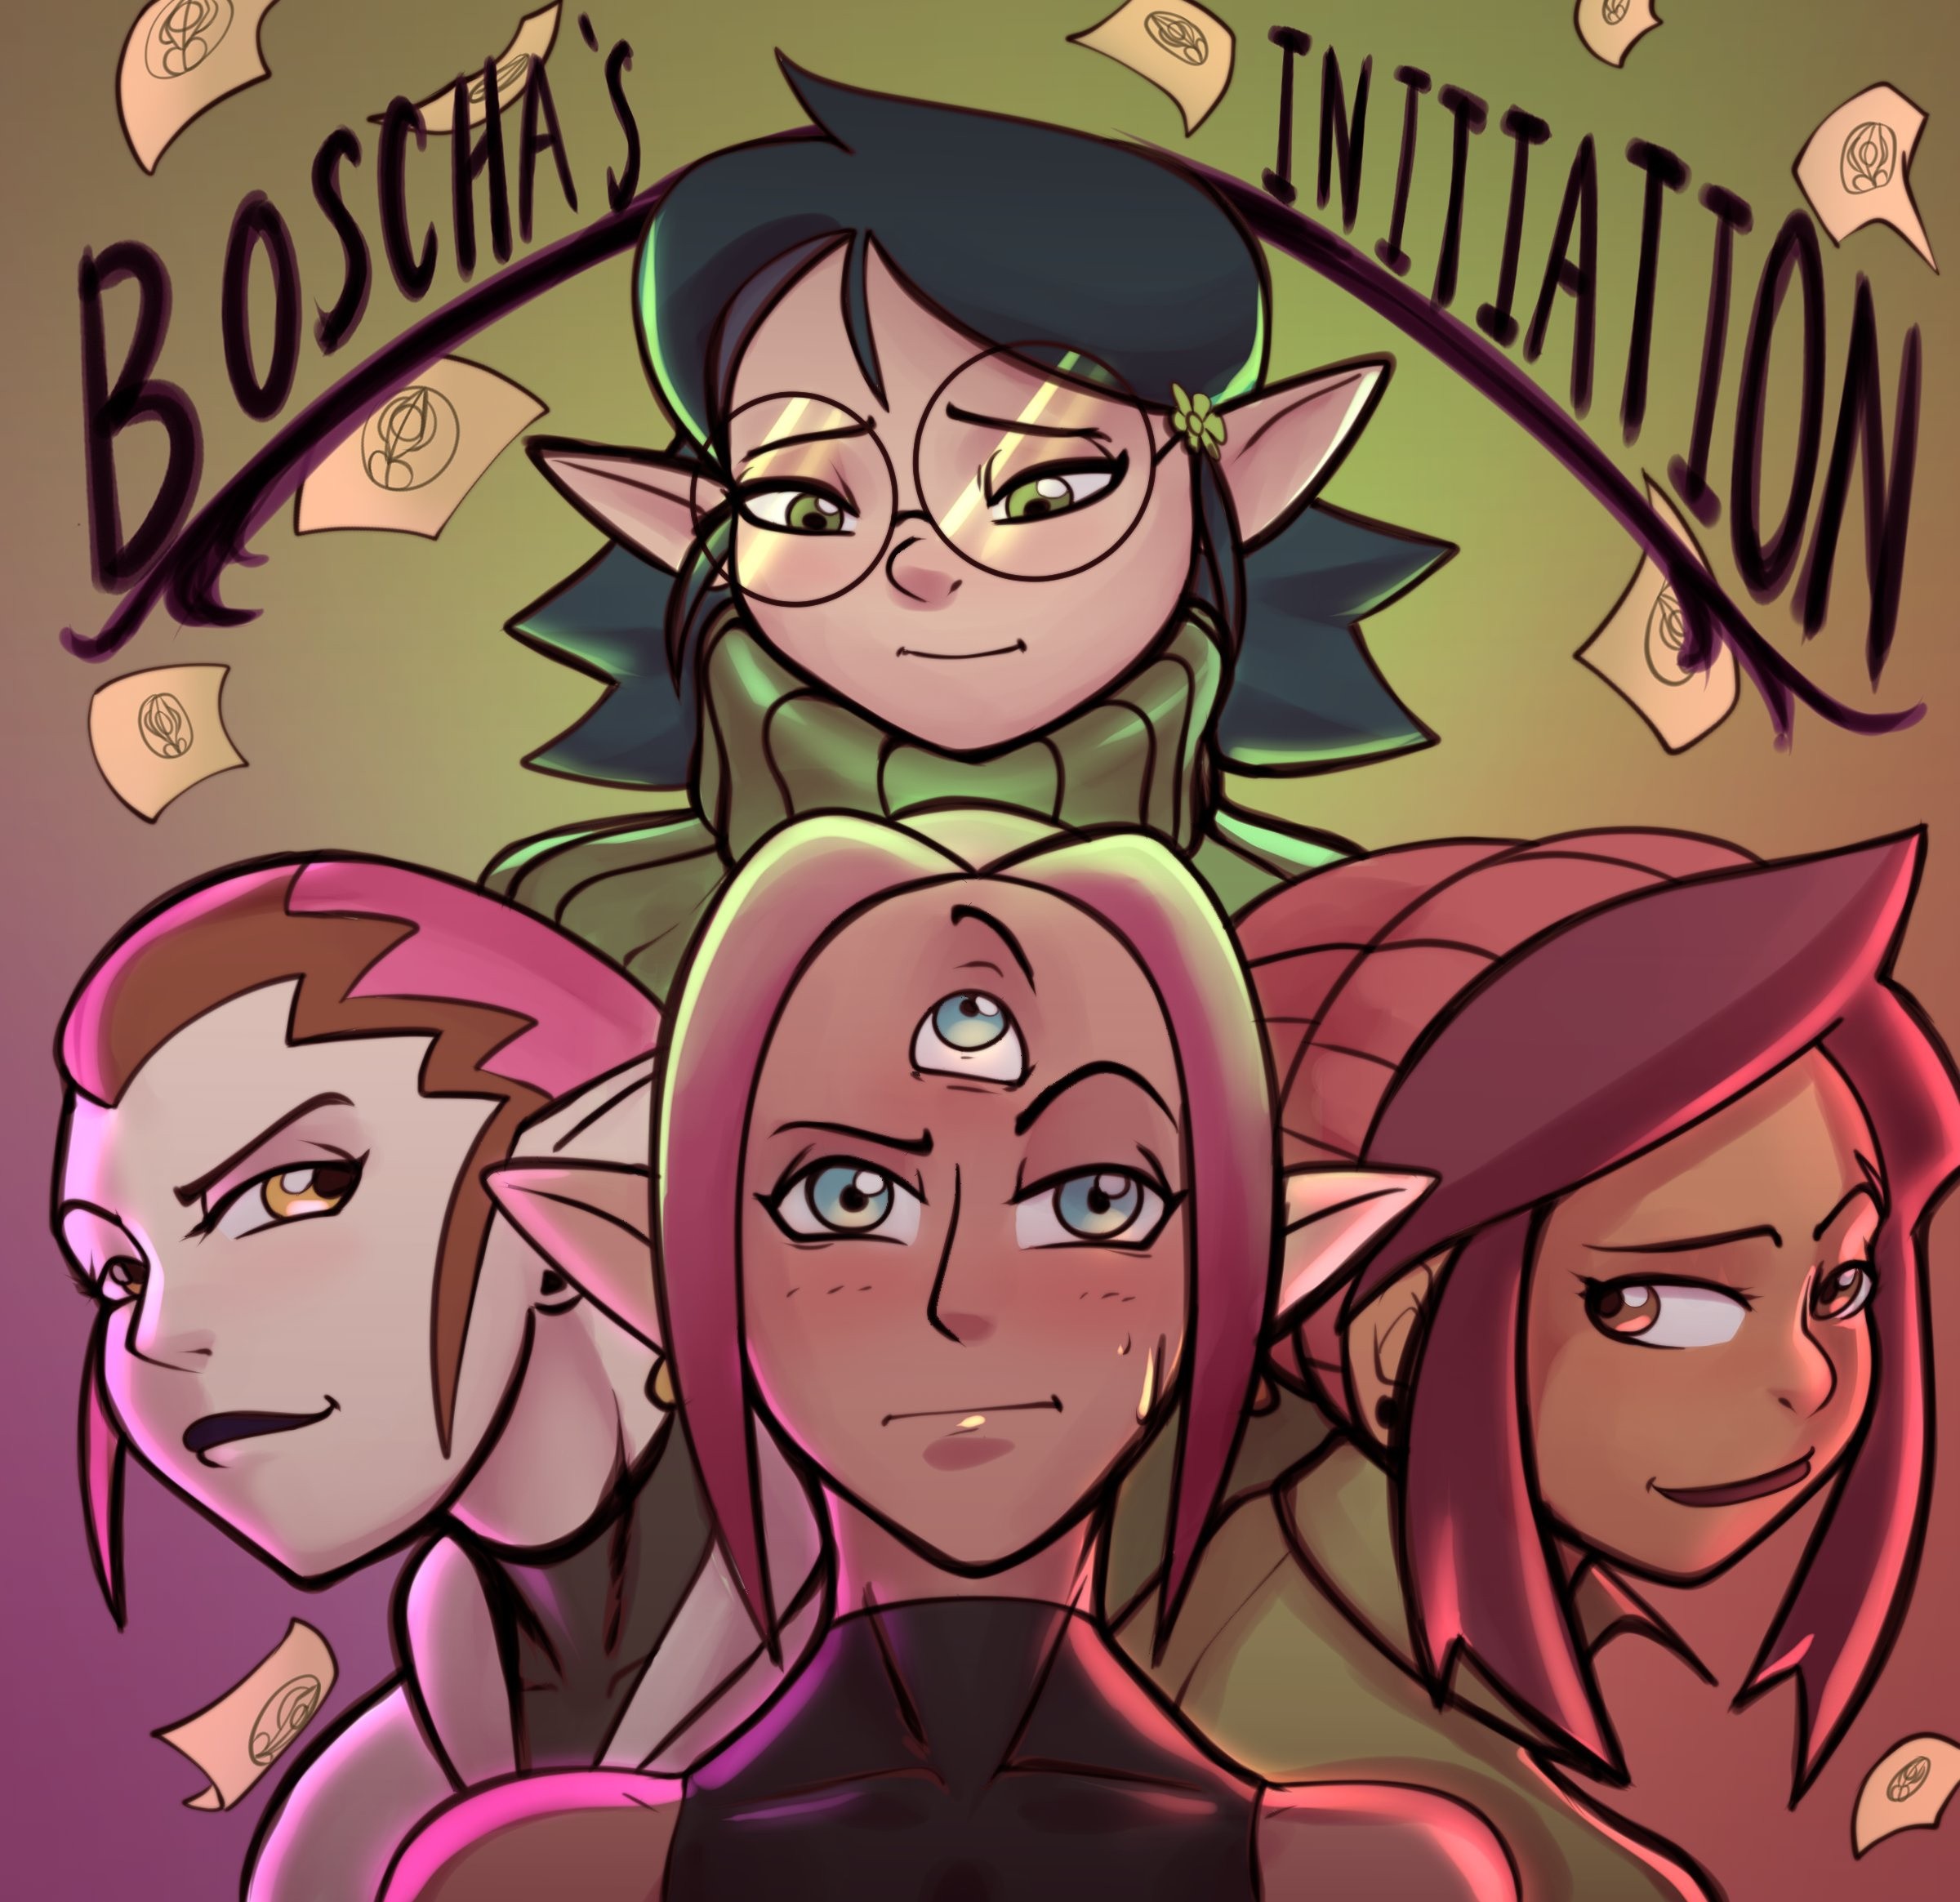 Boscha’s Initiation porn comic picture 1